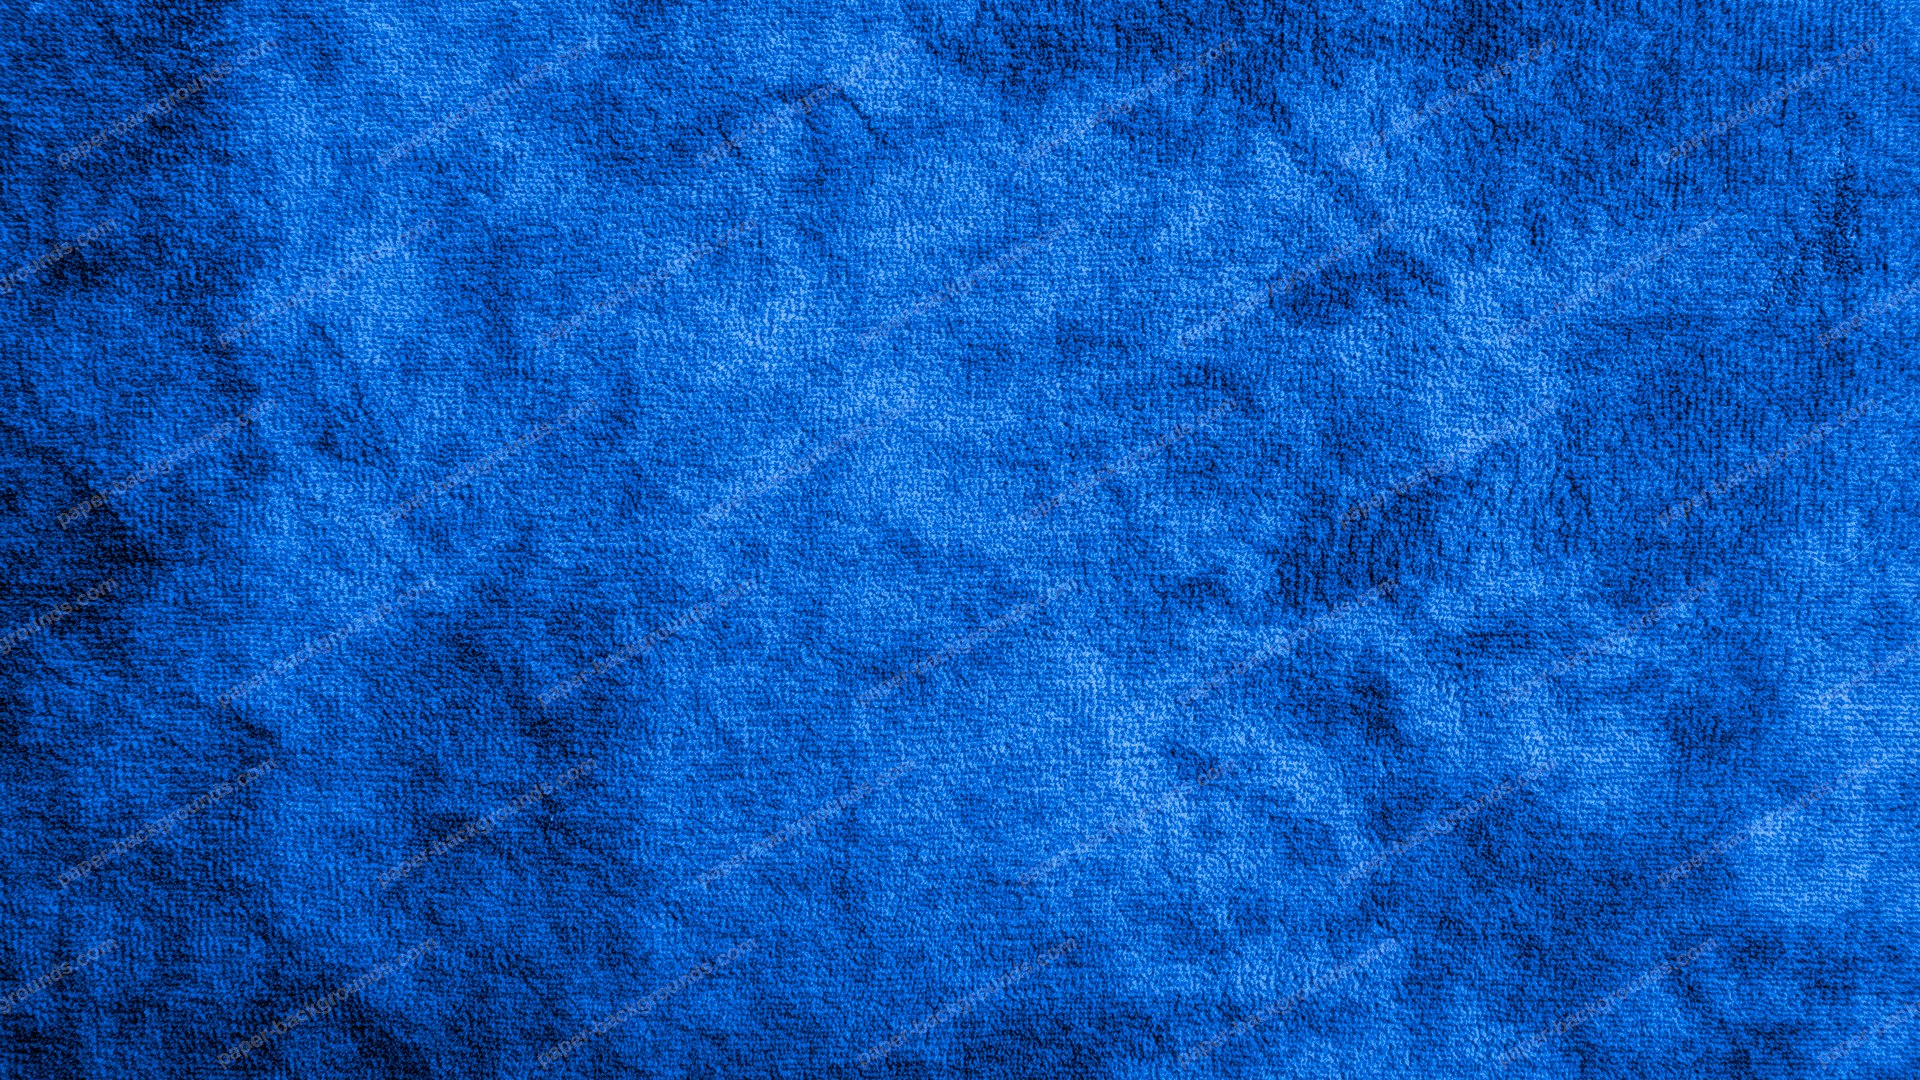 50+] Blue Textured Background Wallpaper - WallpaperSafari